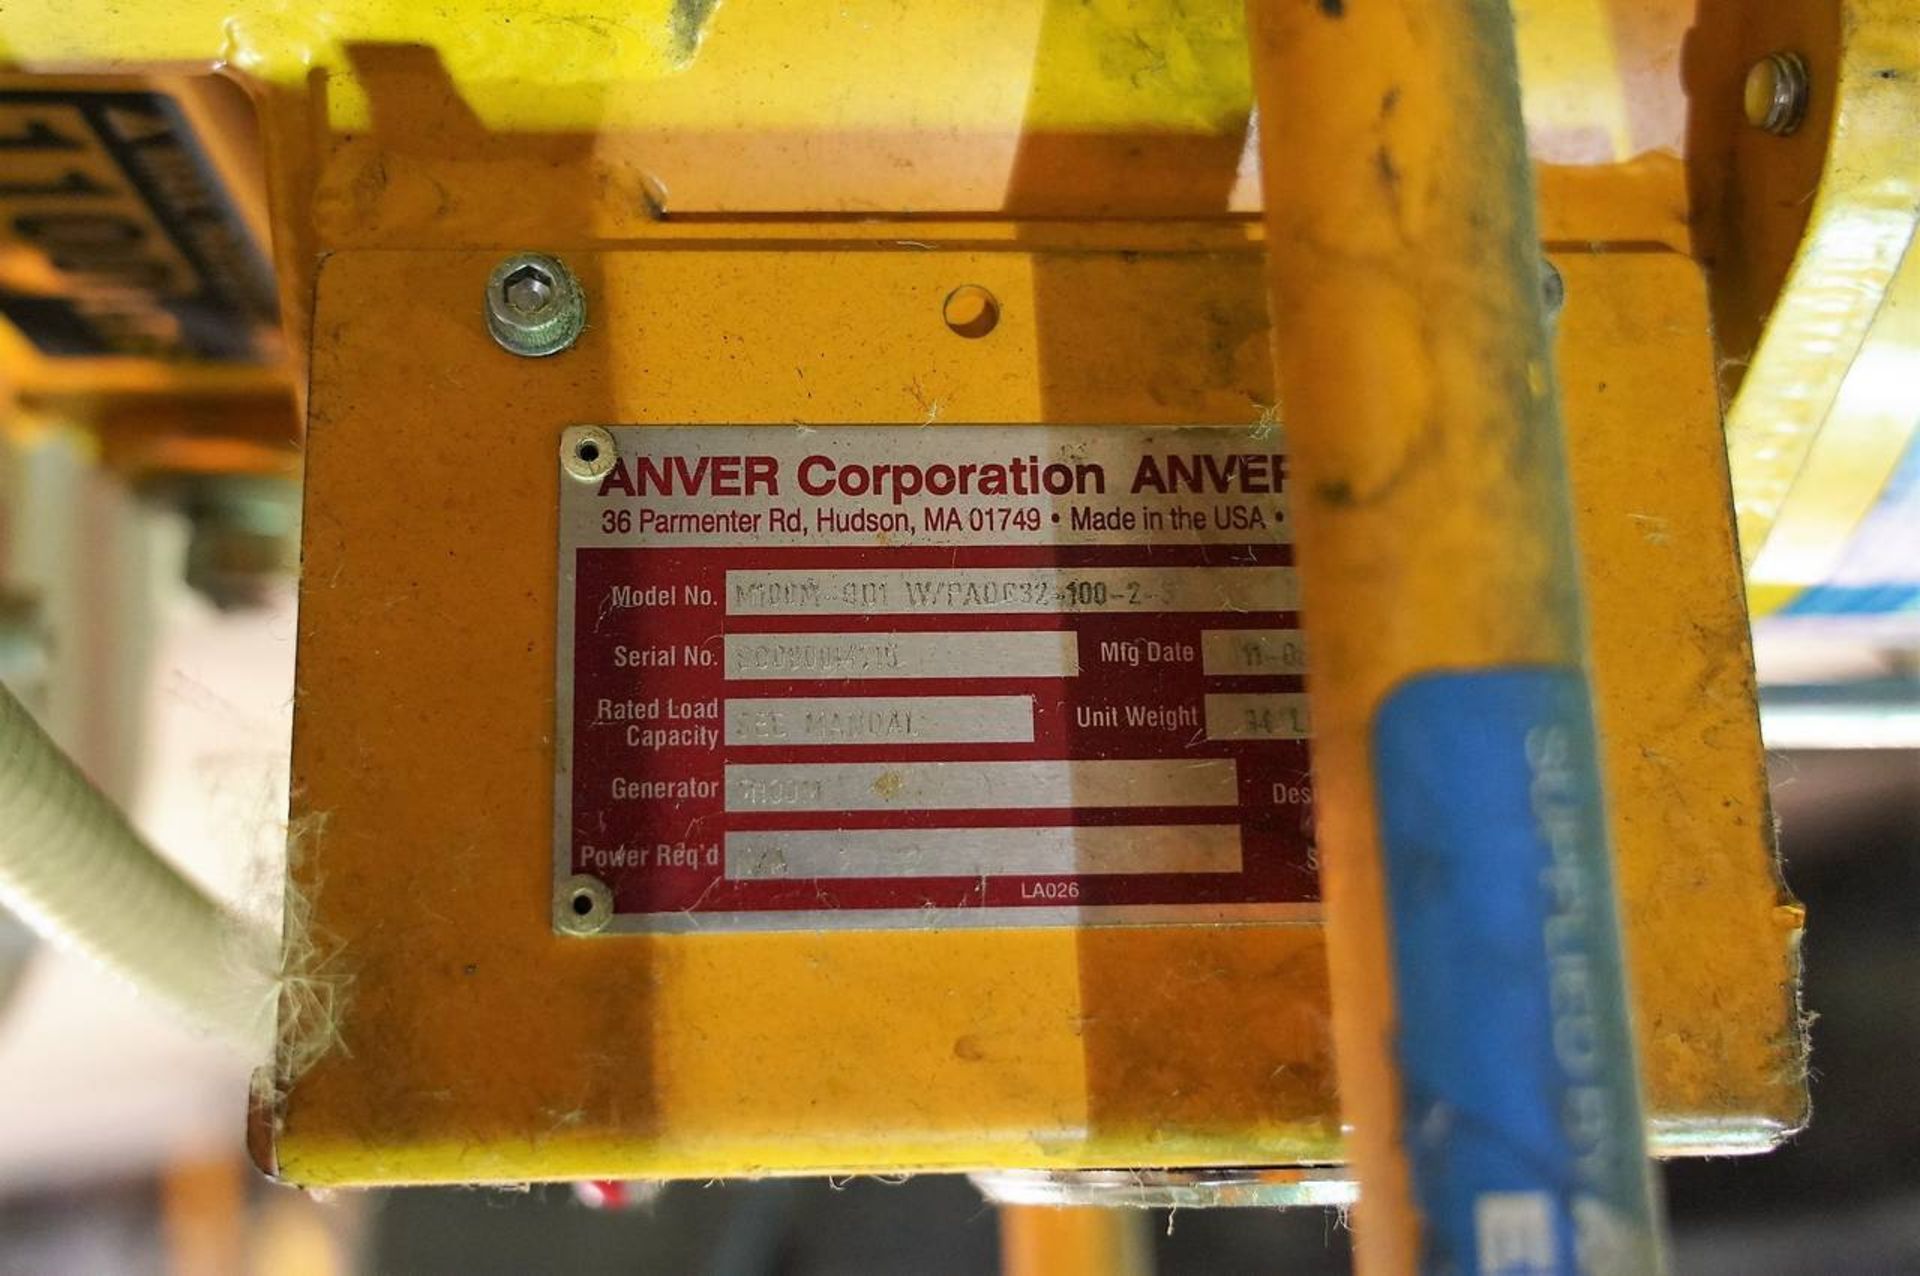 2011 Anver M100M-QD1 W/PA0032-100-2 Mechanical Vacuum Lifter - Image 6 of 7